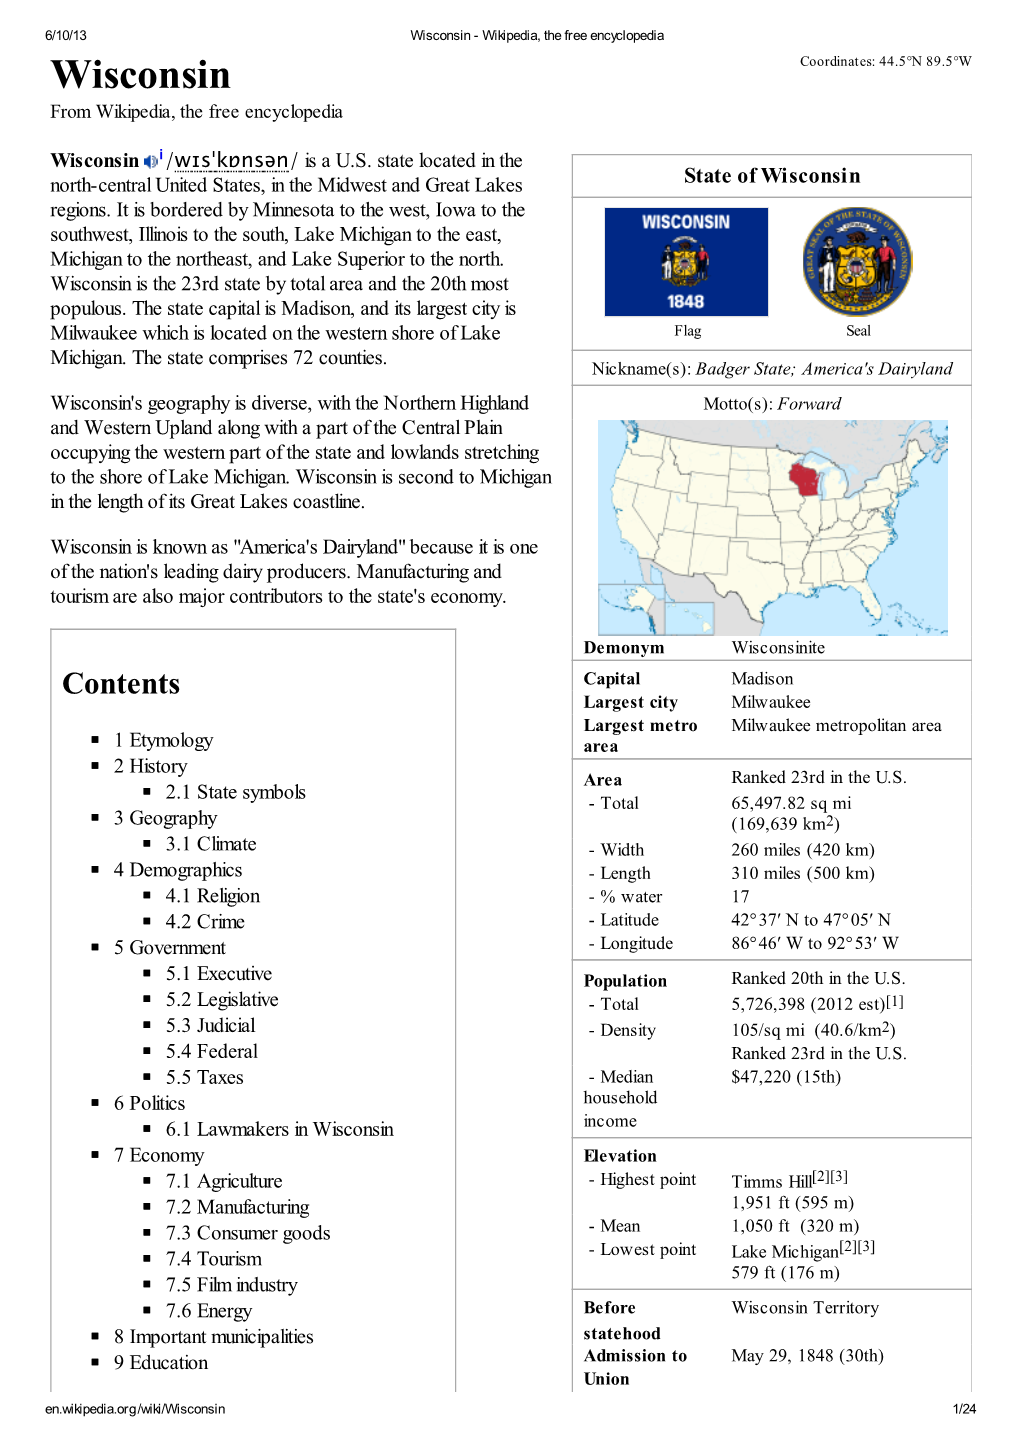 Wisconsin - Wikipedia, the Free Encyclopedia Wisconsin Coordinates: 44.5°N 89.5°W from Wikipedia, the Free Encyclopedia